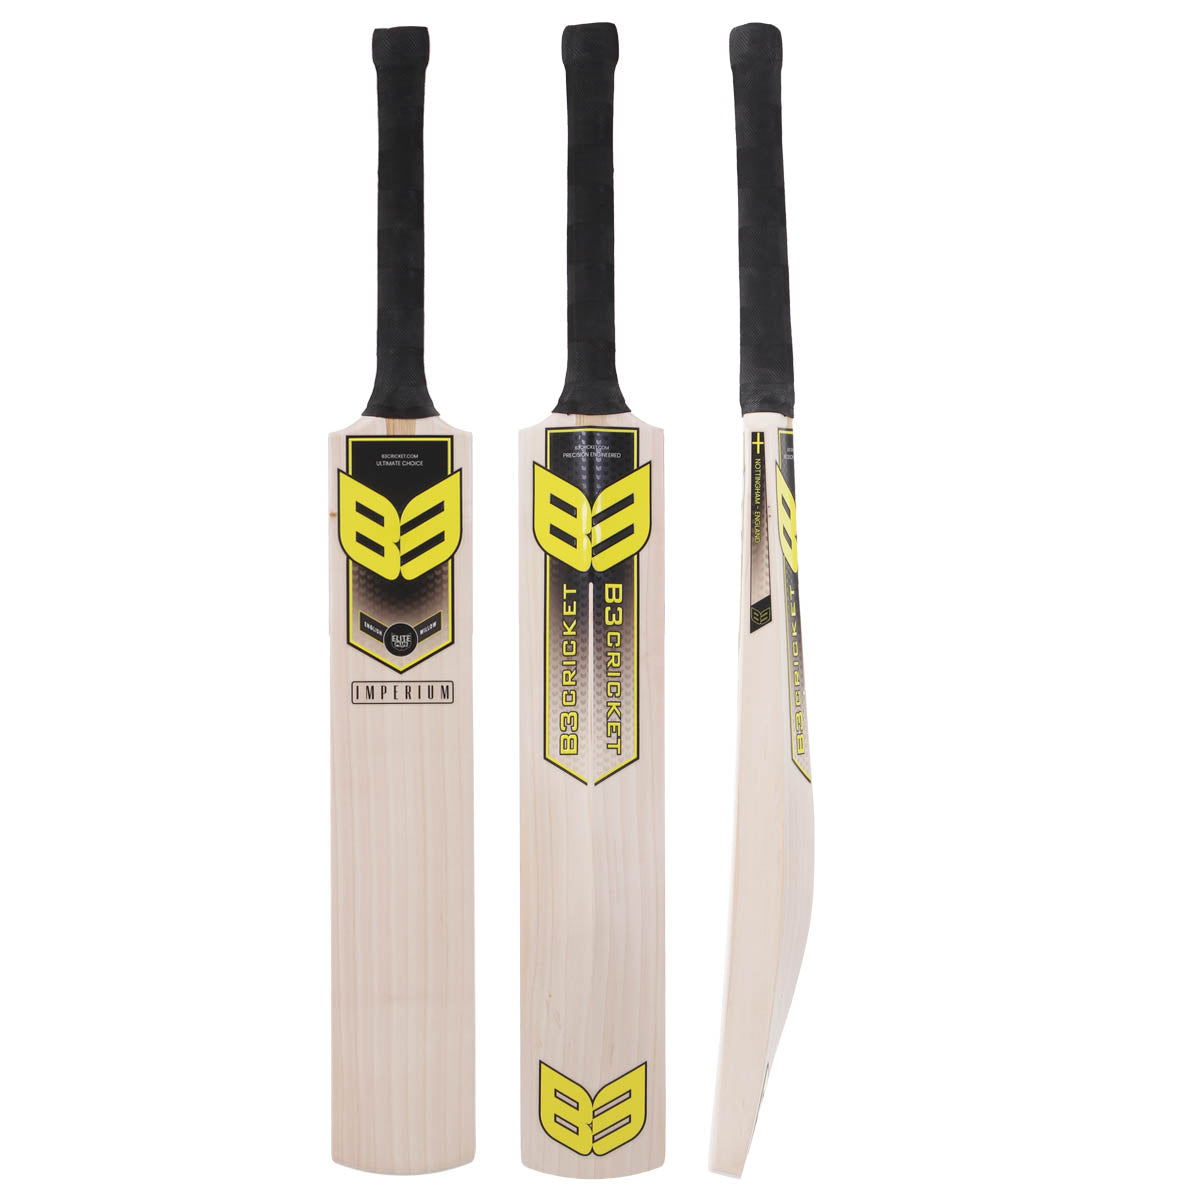 B3 Cricket Imperium Excel (Grade 3) Cricket Bat - The Cricket Store